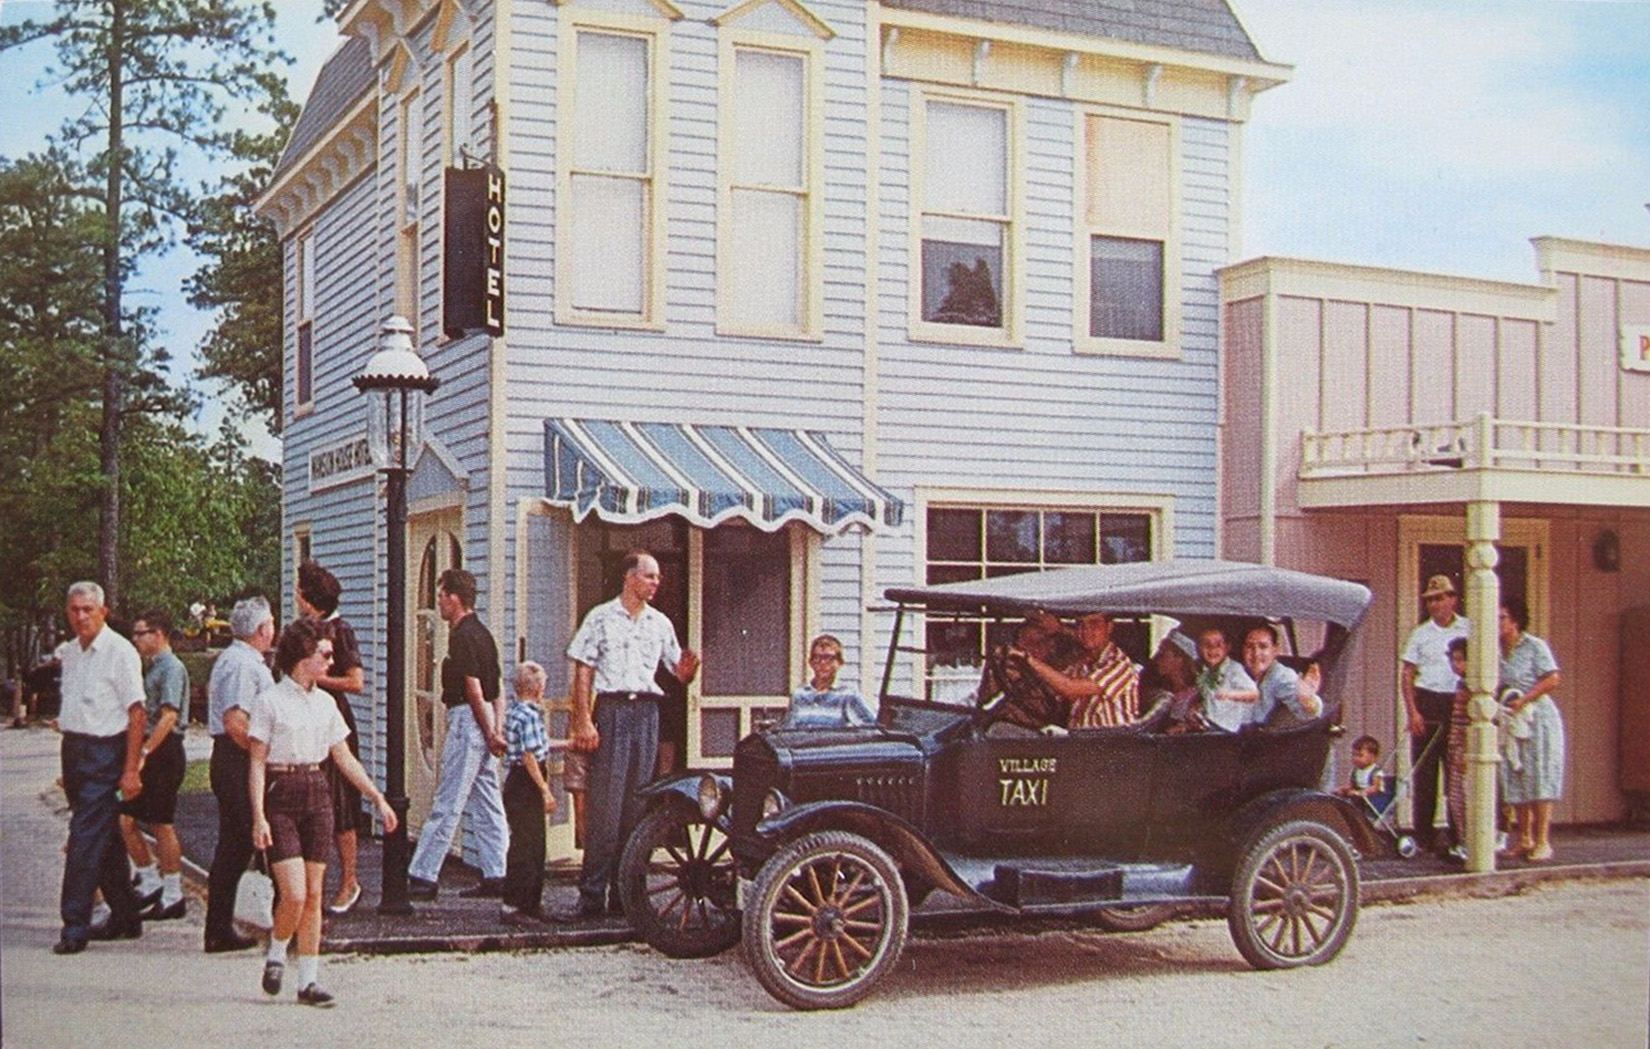 Pleasantville - Adventure Village on Black Horse Pike - c 1950s